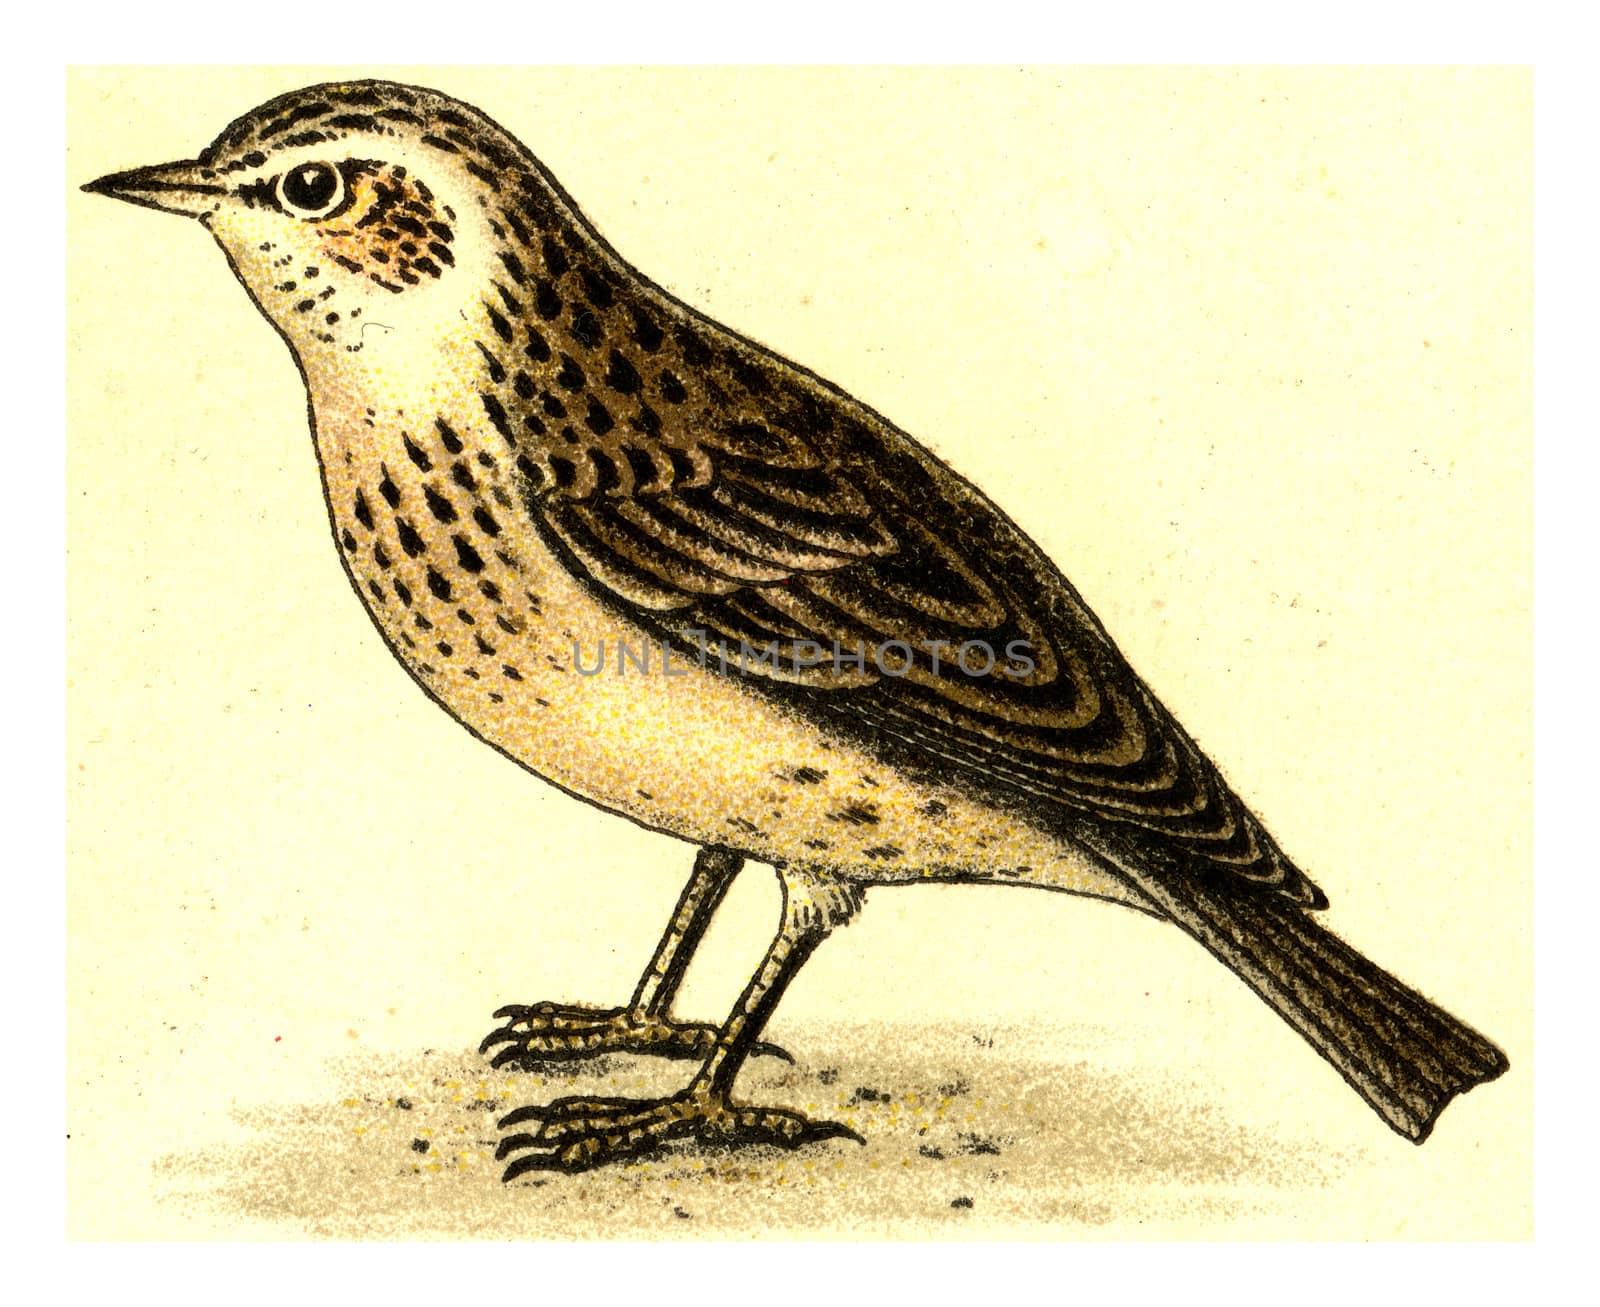 Skylark, vintage engraved illustration. From Deutch Birds of Europe Atlas.
